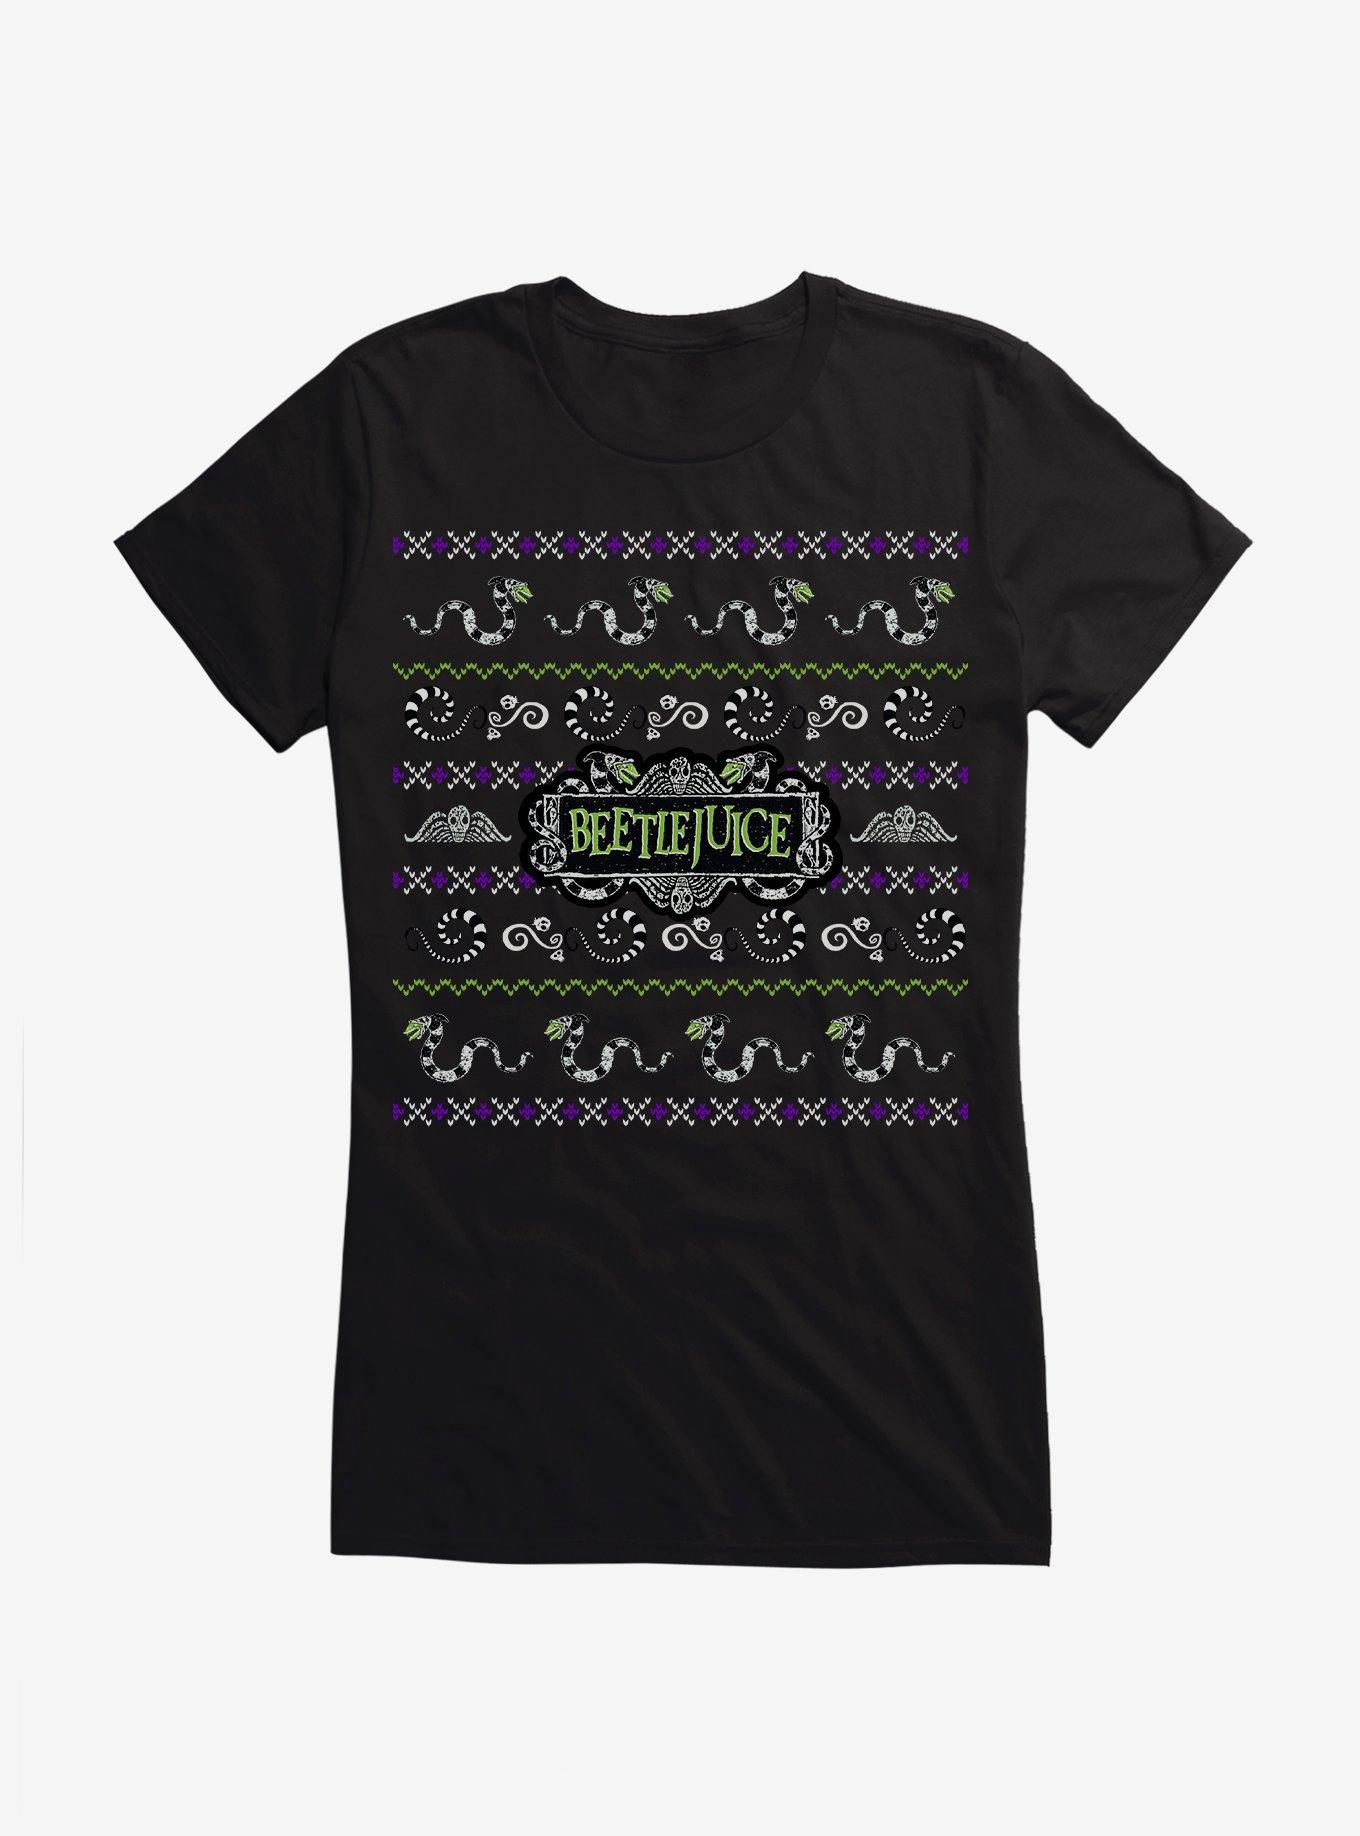 Beetlejuice Ugly Christmas Sweater Pattern Girls T-Shirt, BLACK, hi-res